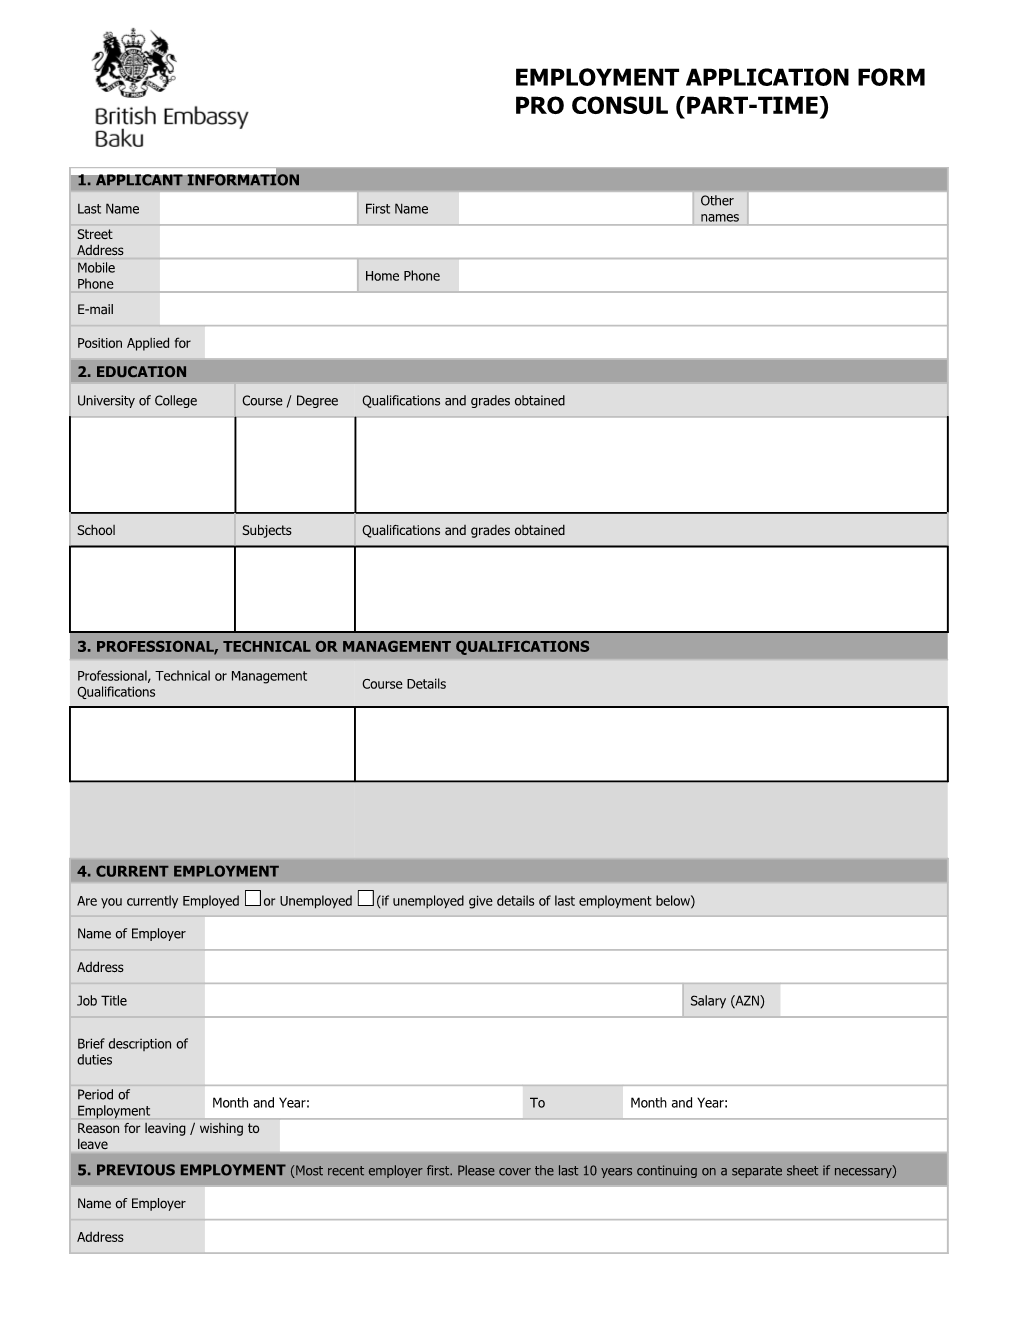 Employment Application Form Visa Assistant and Interpreter